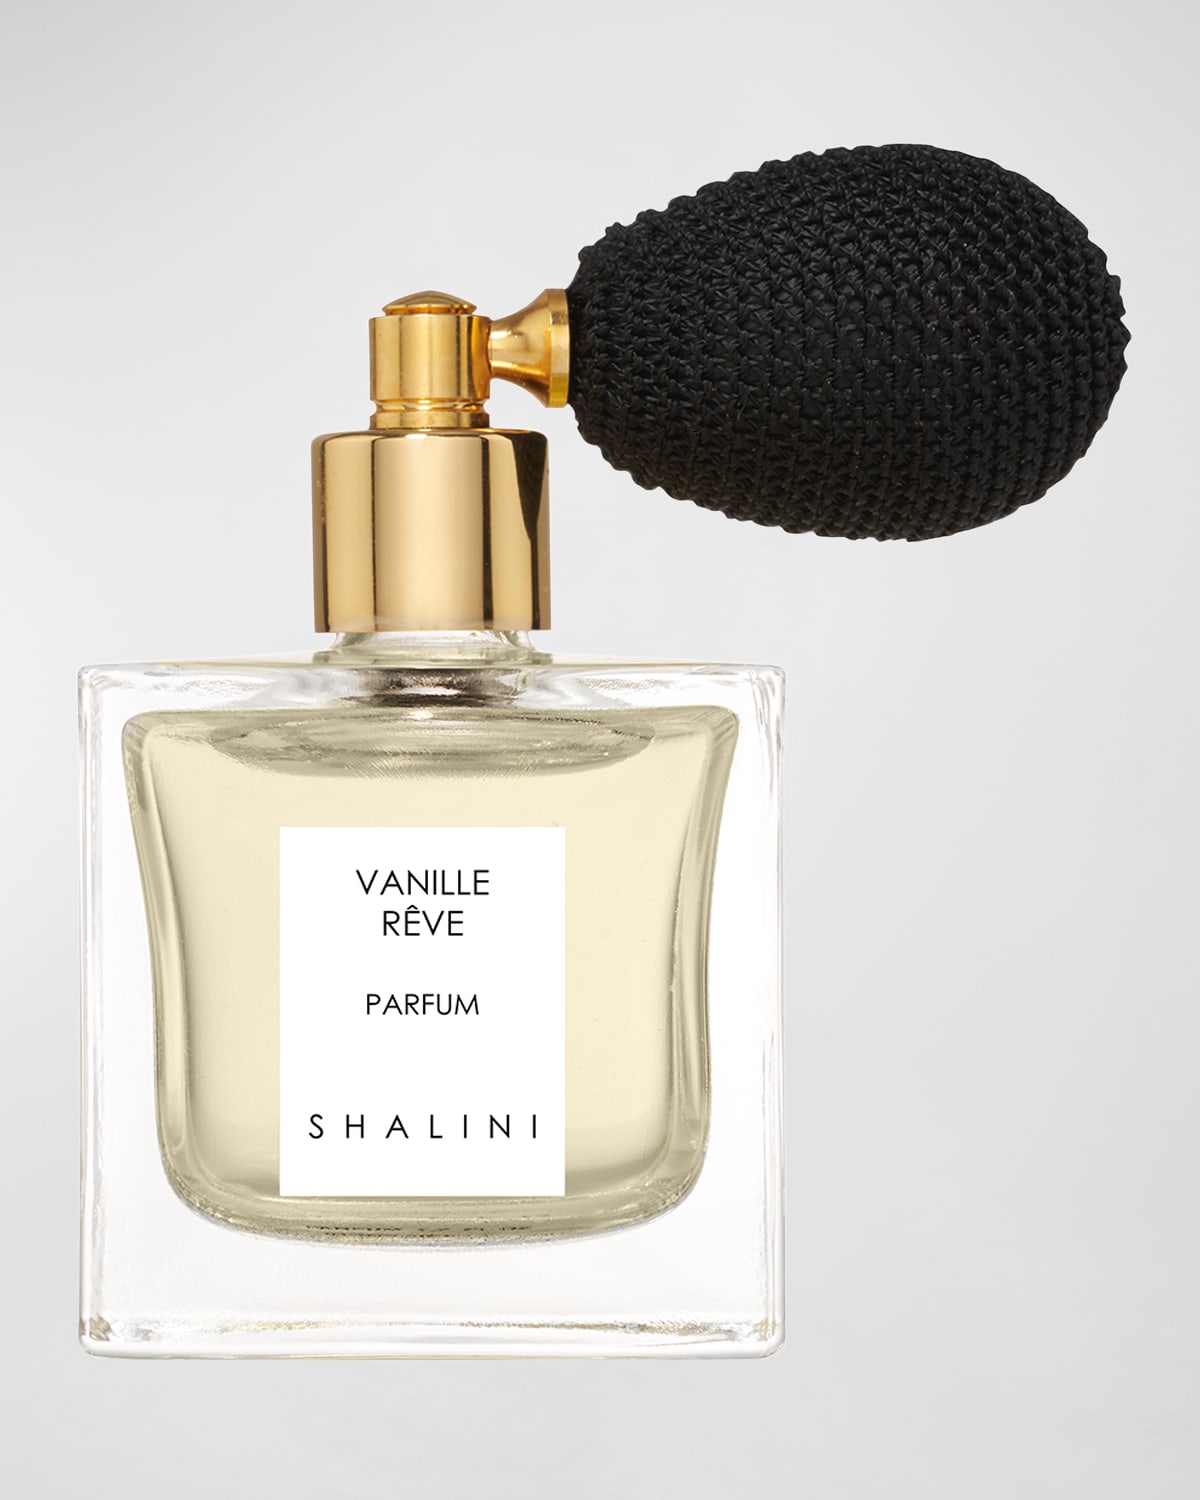 Vanille Reve Parfum in Cubique Glass Bottle with Black Bulb Atomizer, 1.7 oz./ 50 mL